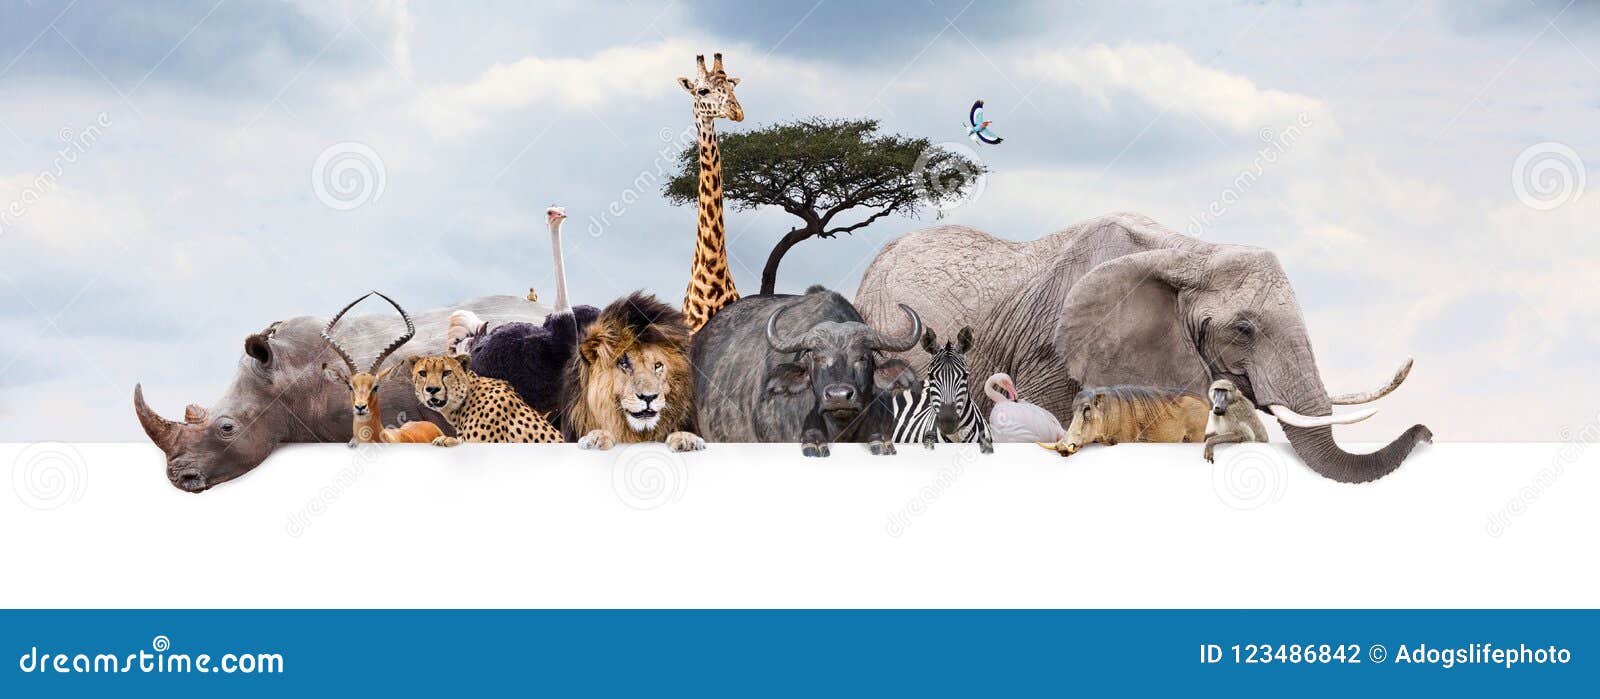 safari zoo animals over web banner